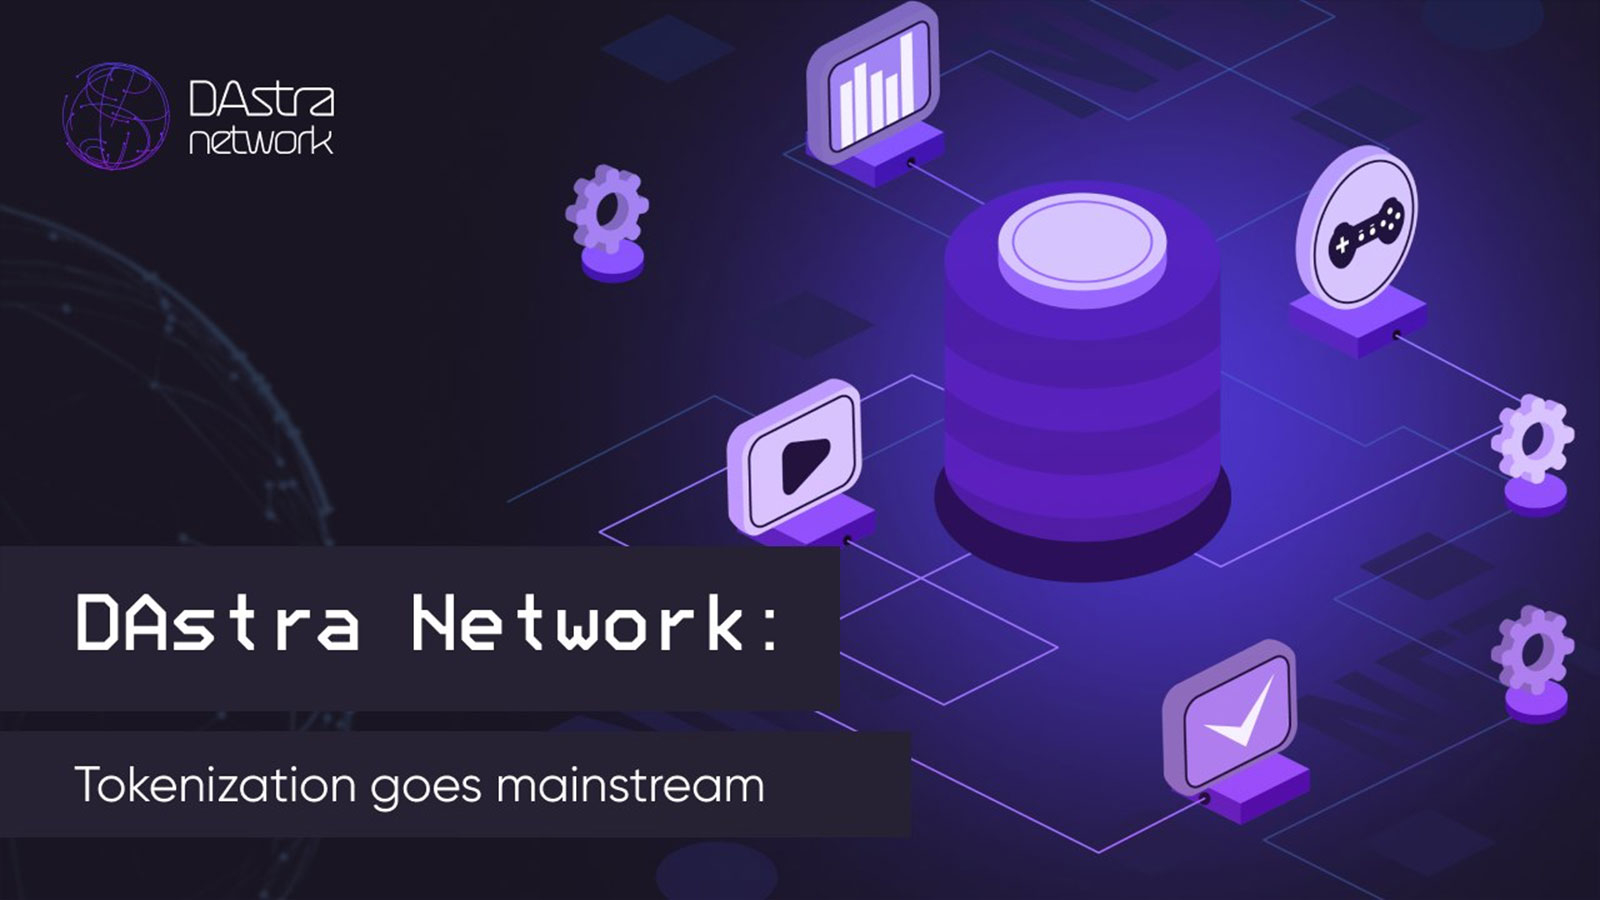 DAstra Network: Tokenization Goes Mainstream